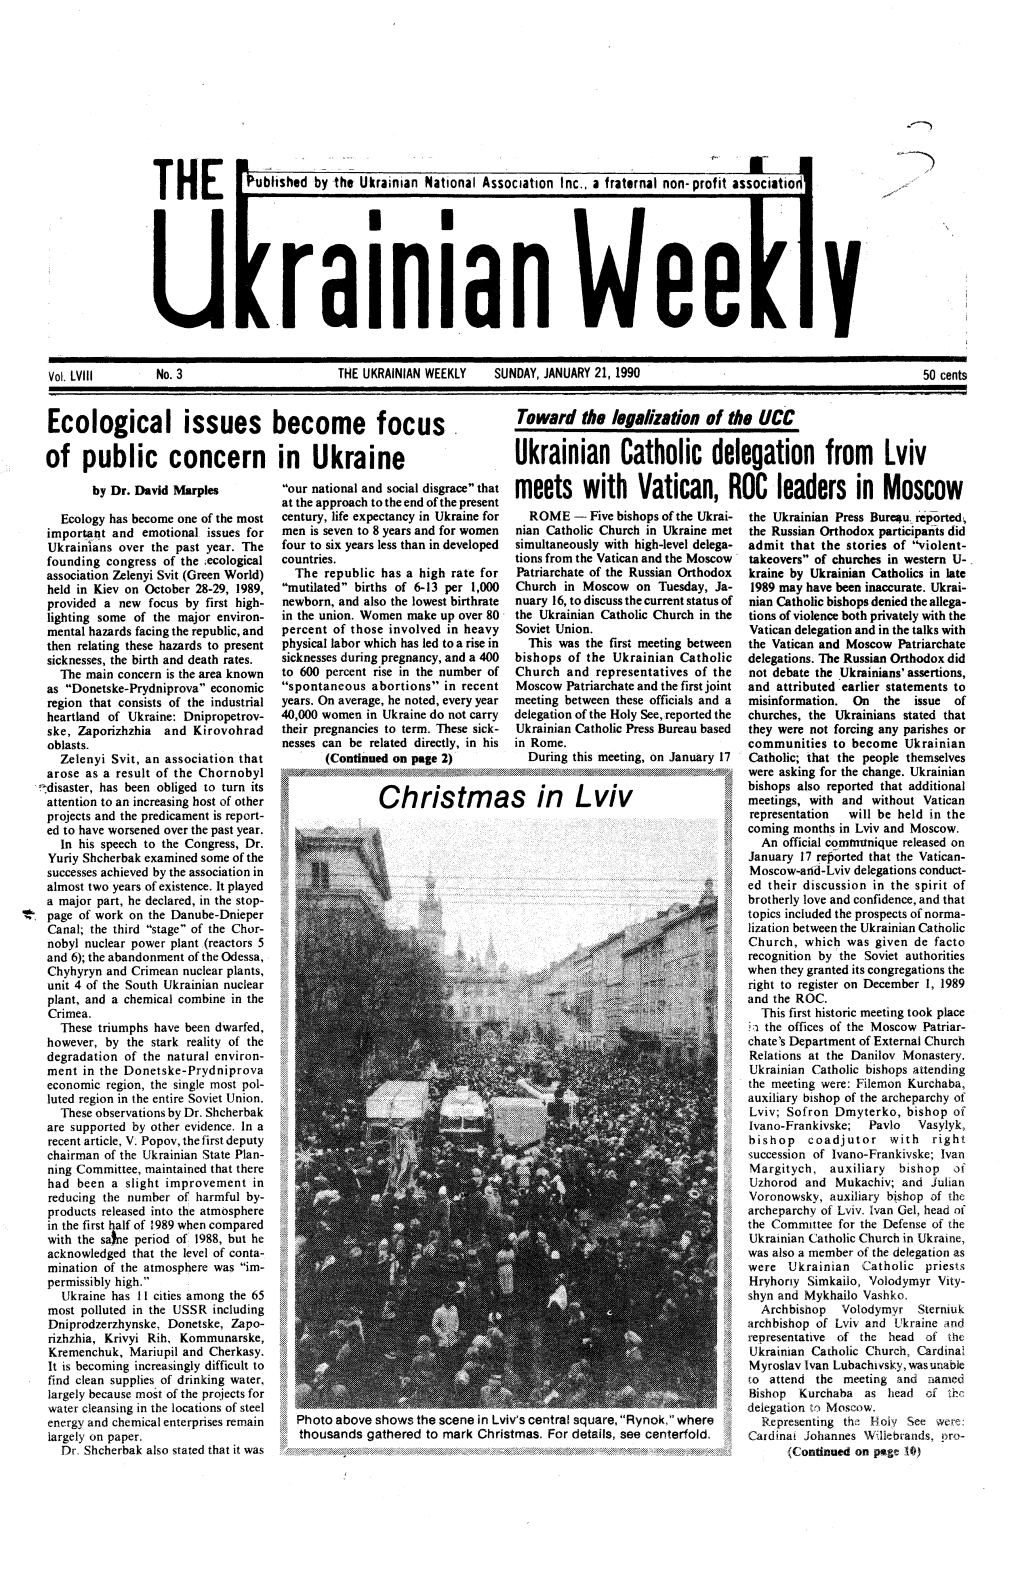 The Ukrainian Weekly 1990, No.3